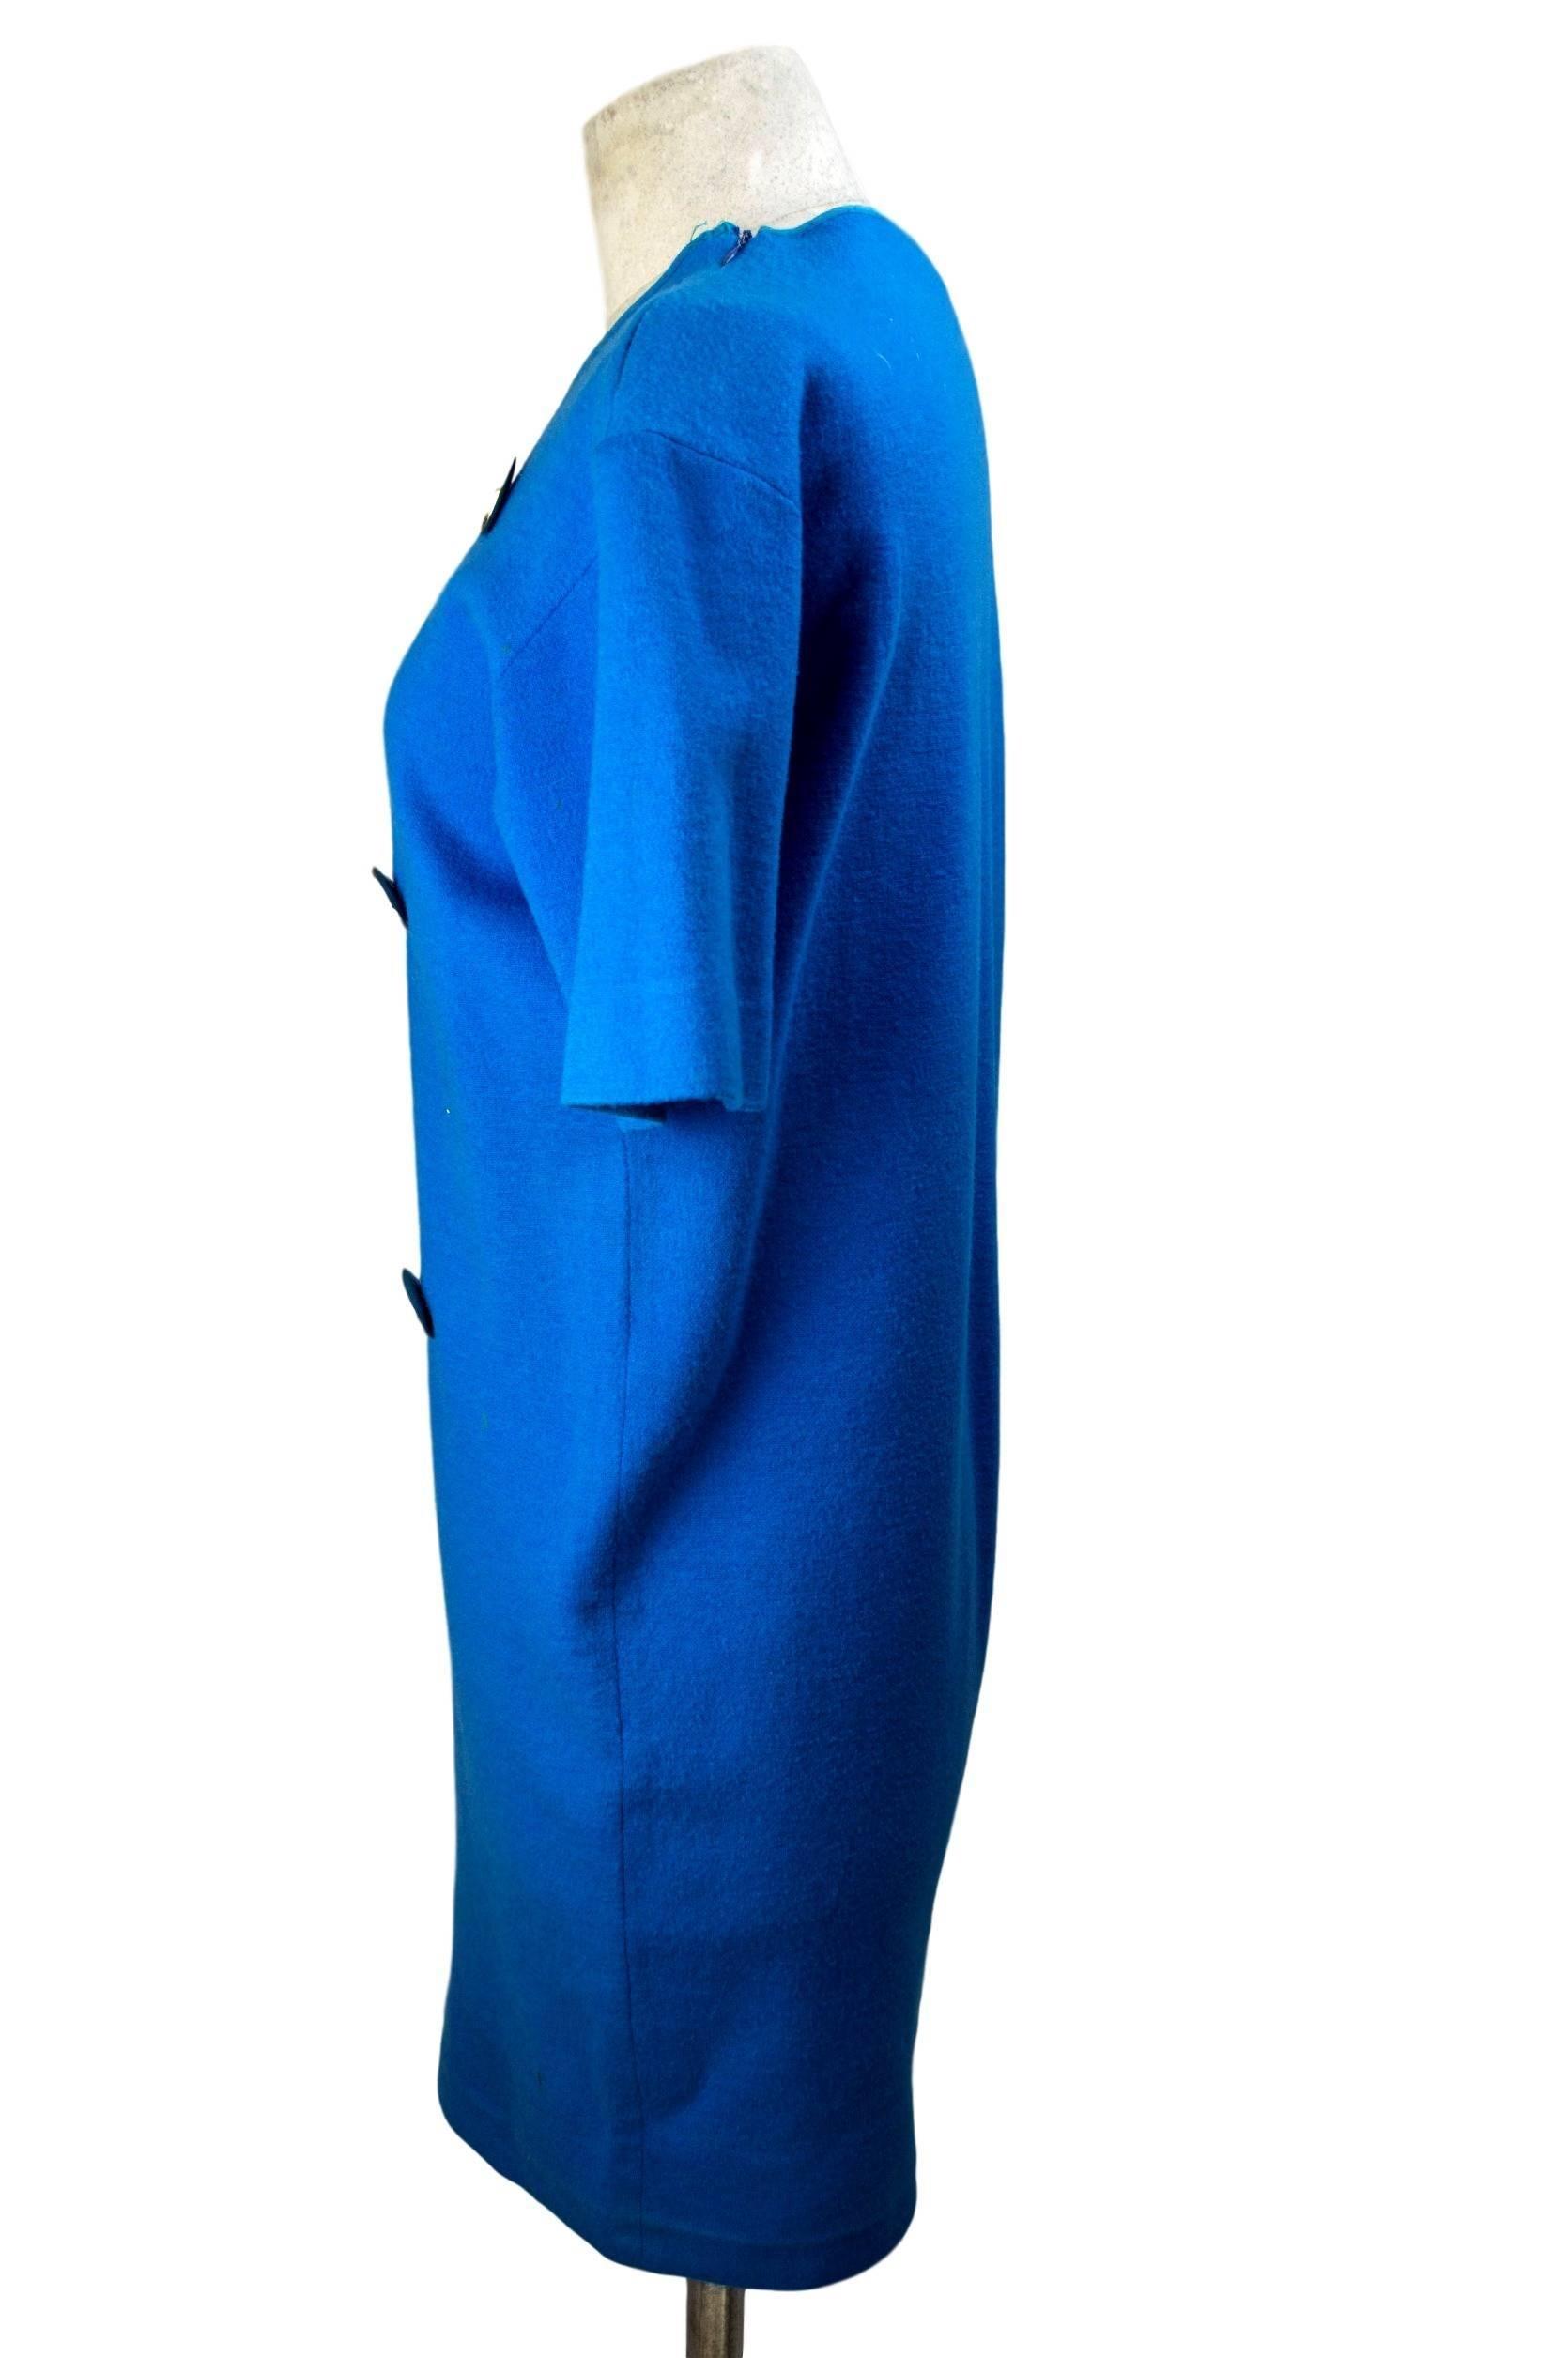 Gianfranco Ferrè vintage 70s blu tunic dress. Special gold buttons double row make it special.

Size: 44 it

Measures:

Shoulders:44 cm
Armpit to armpit:50 cm
Total lenght:87 cm
Sleeves:22 cm
Condition:excellent vintage condition

Fabrication:100%